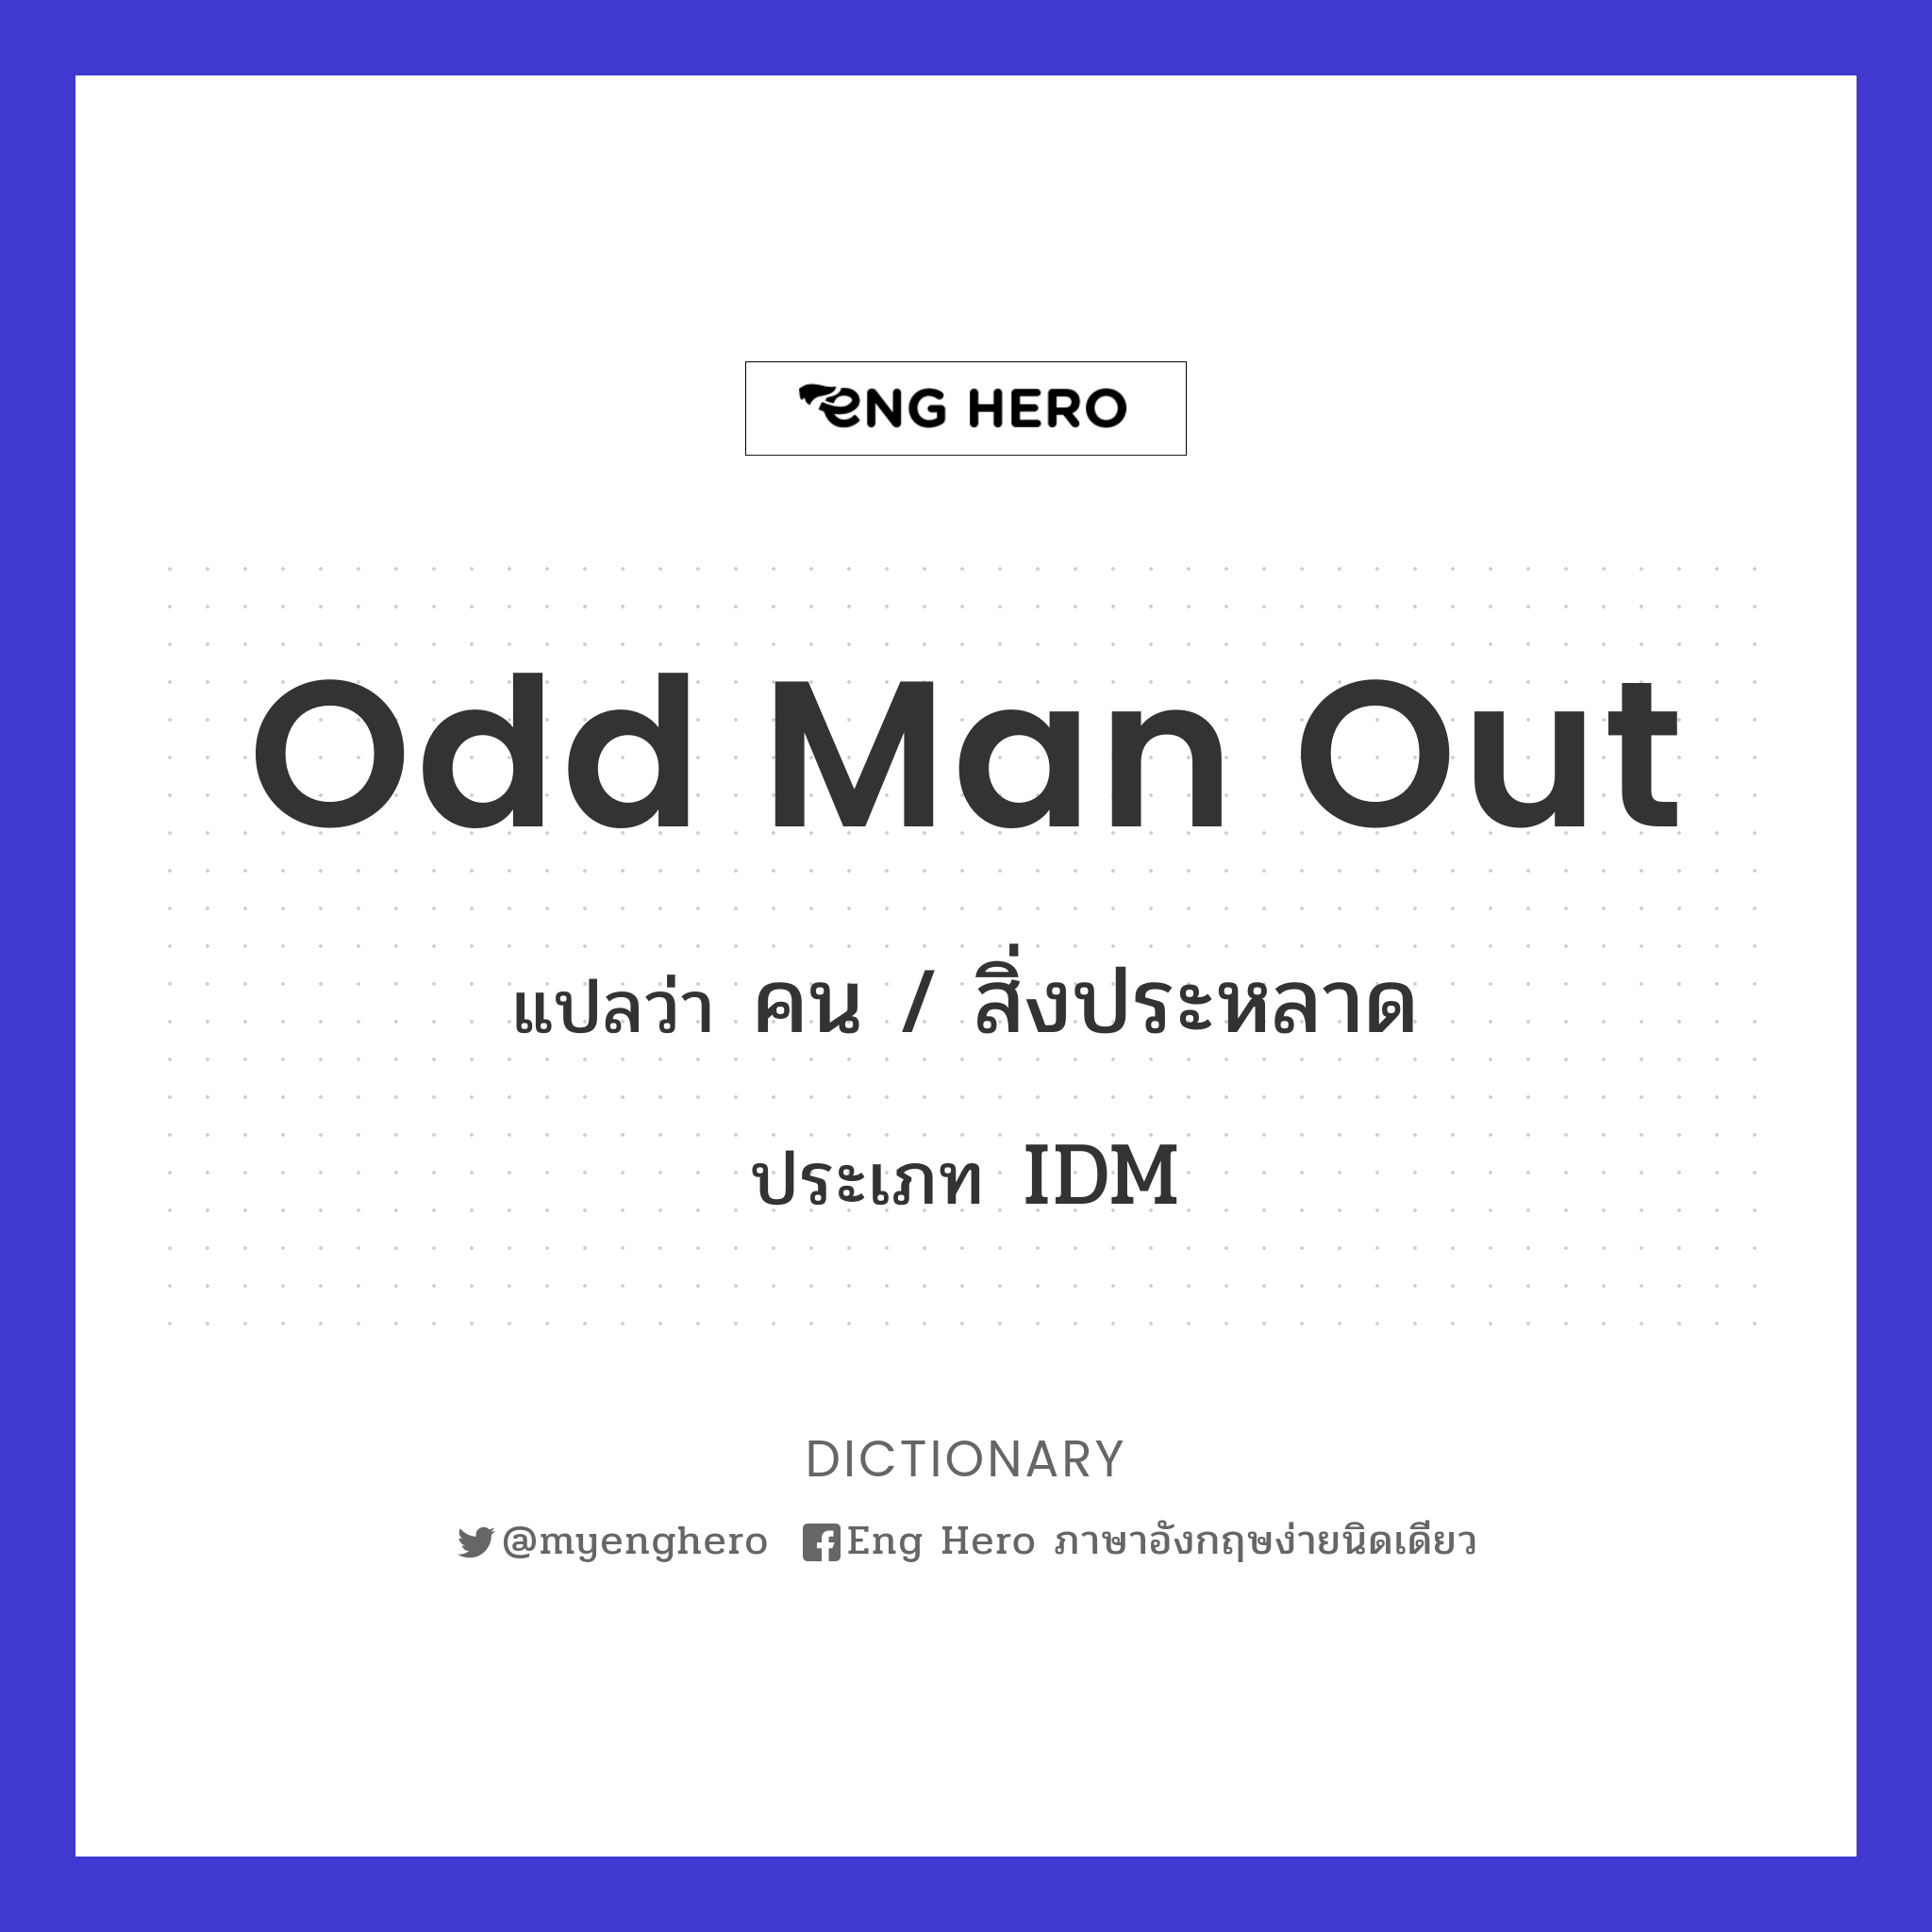 odd man out